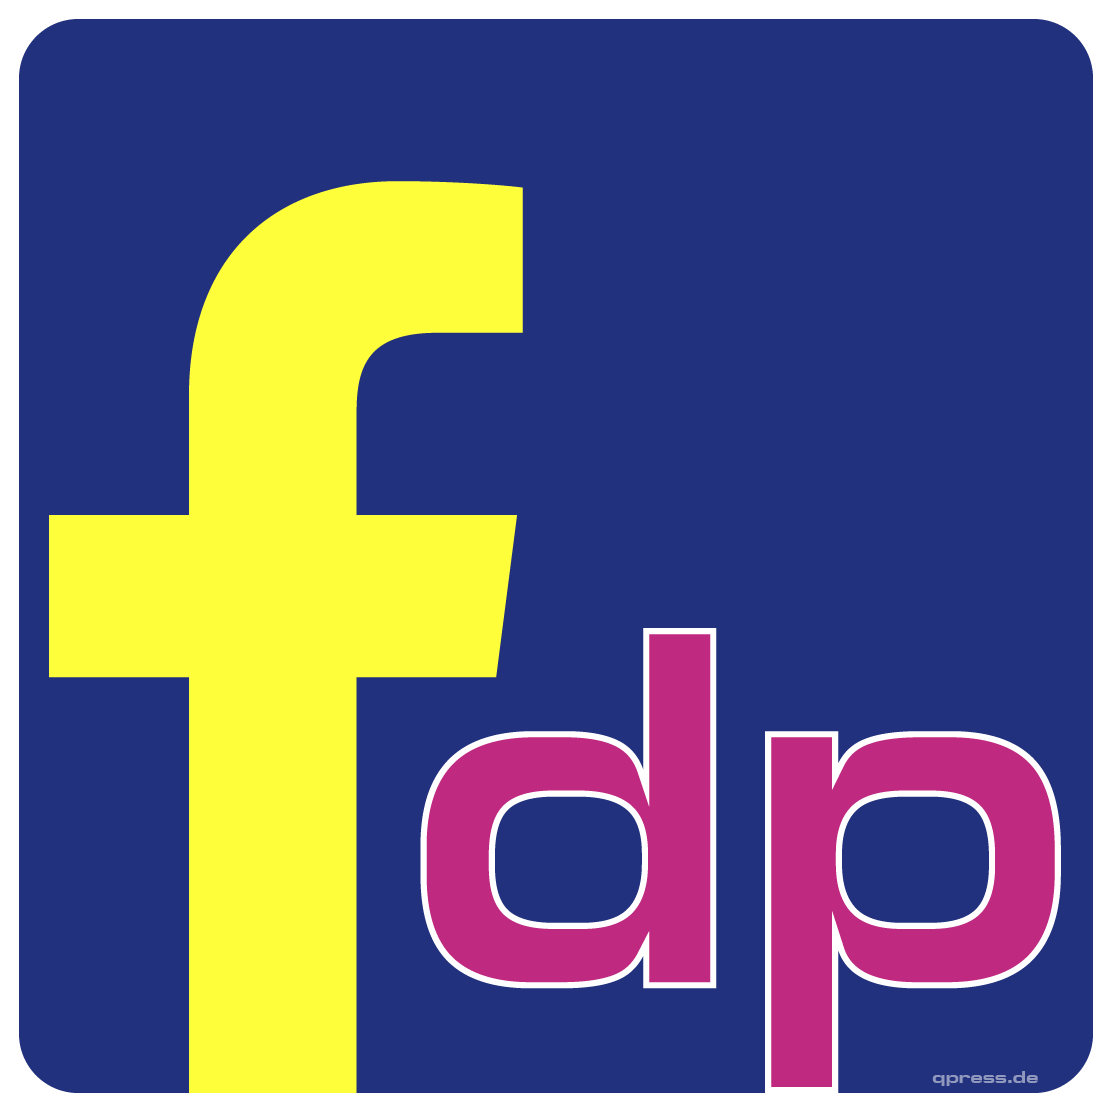 FDP_icon neues Logo 2015 Freie demokraten Partei Image qpress-01